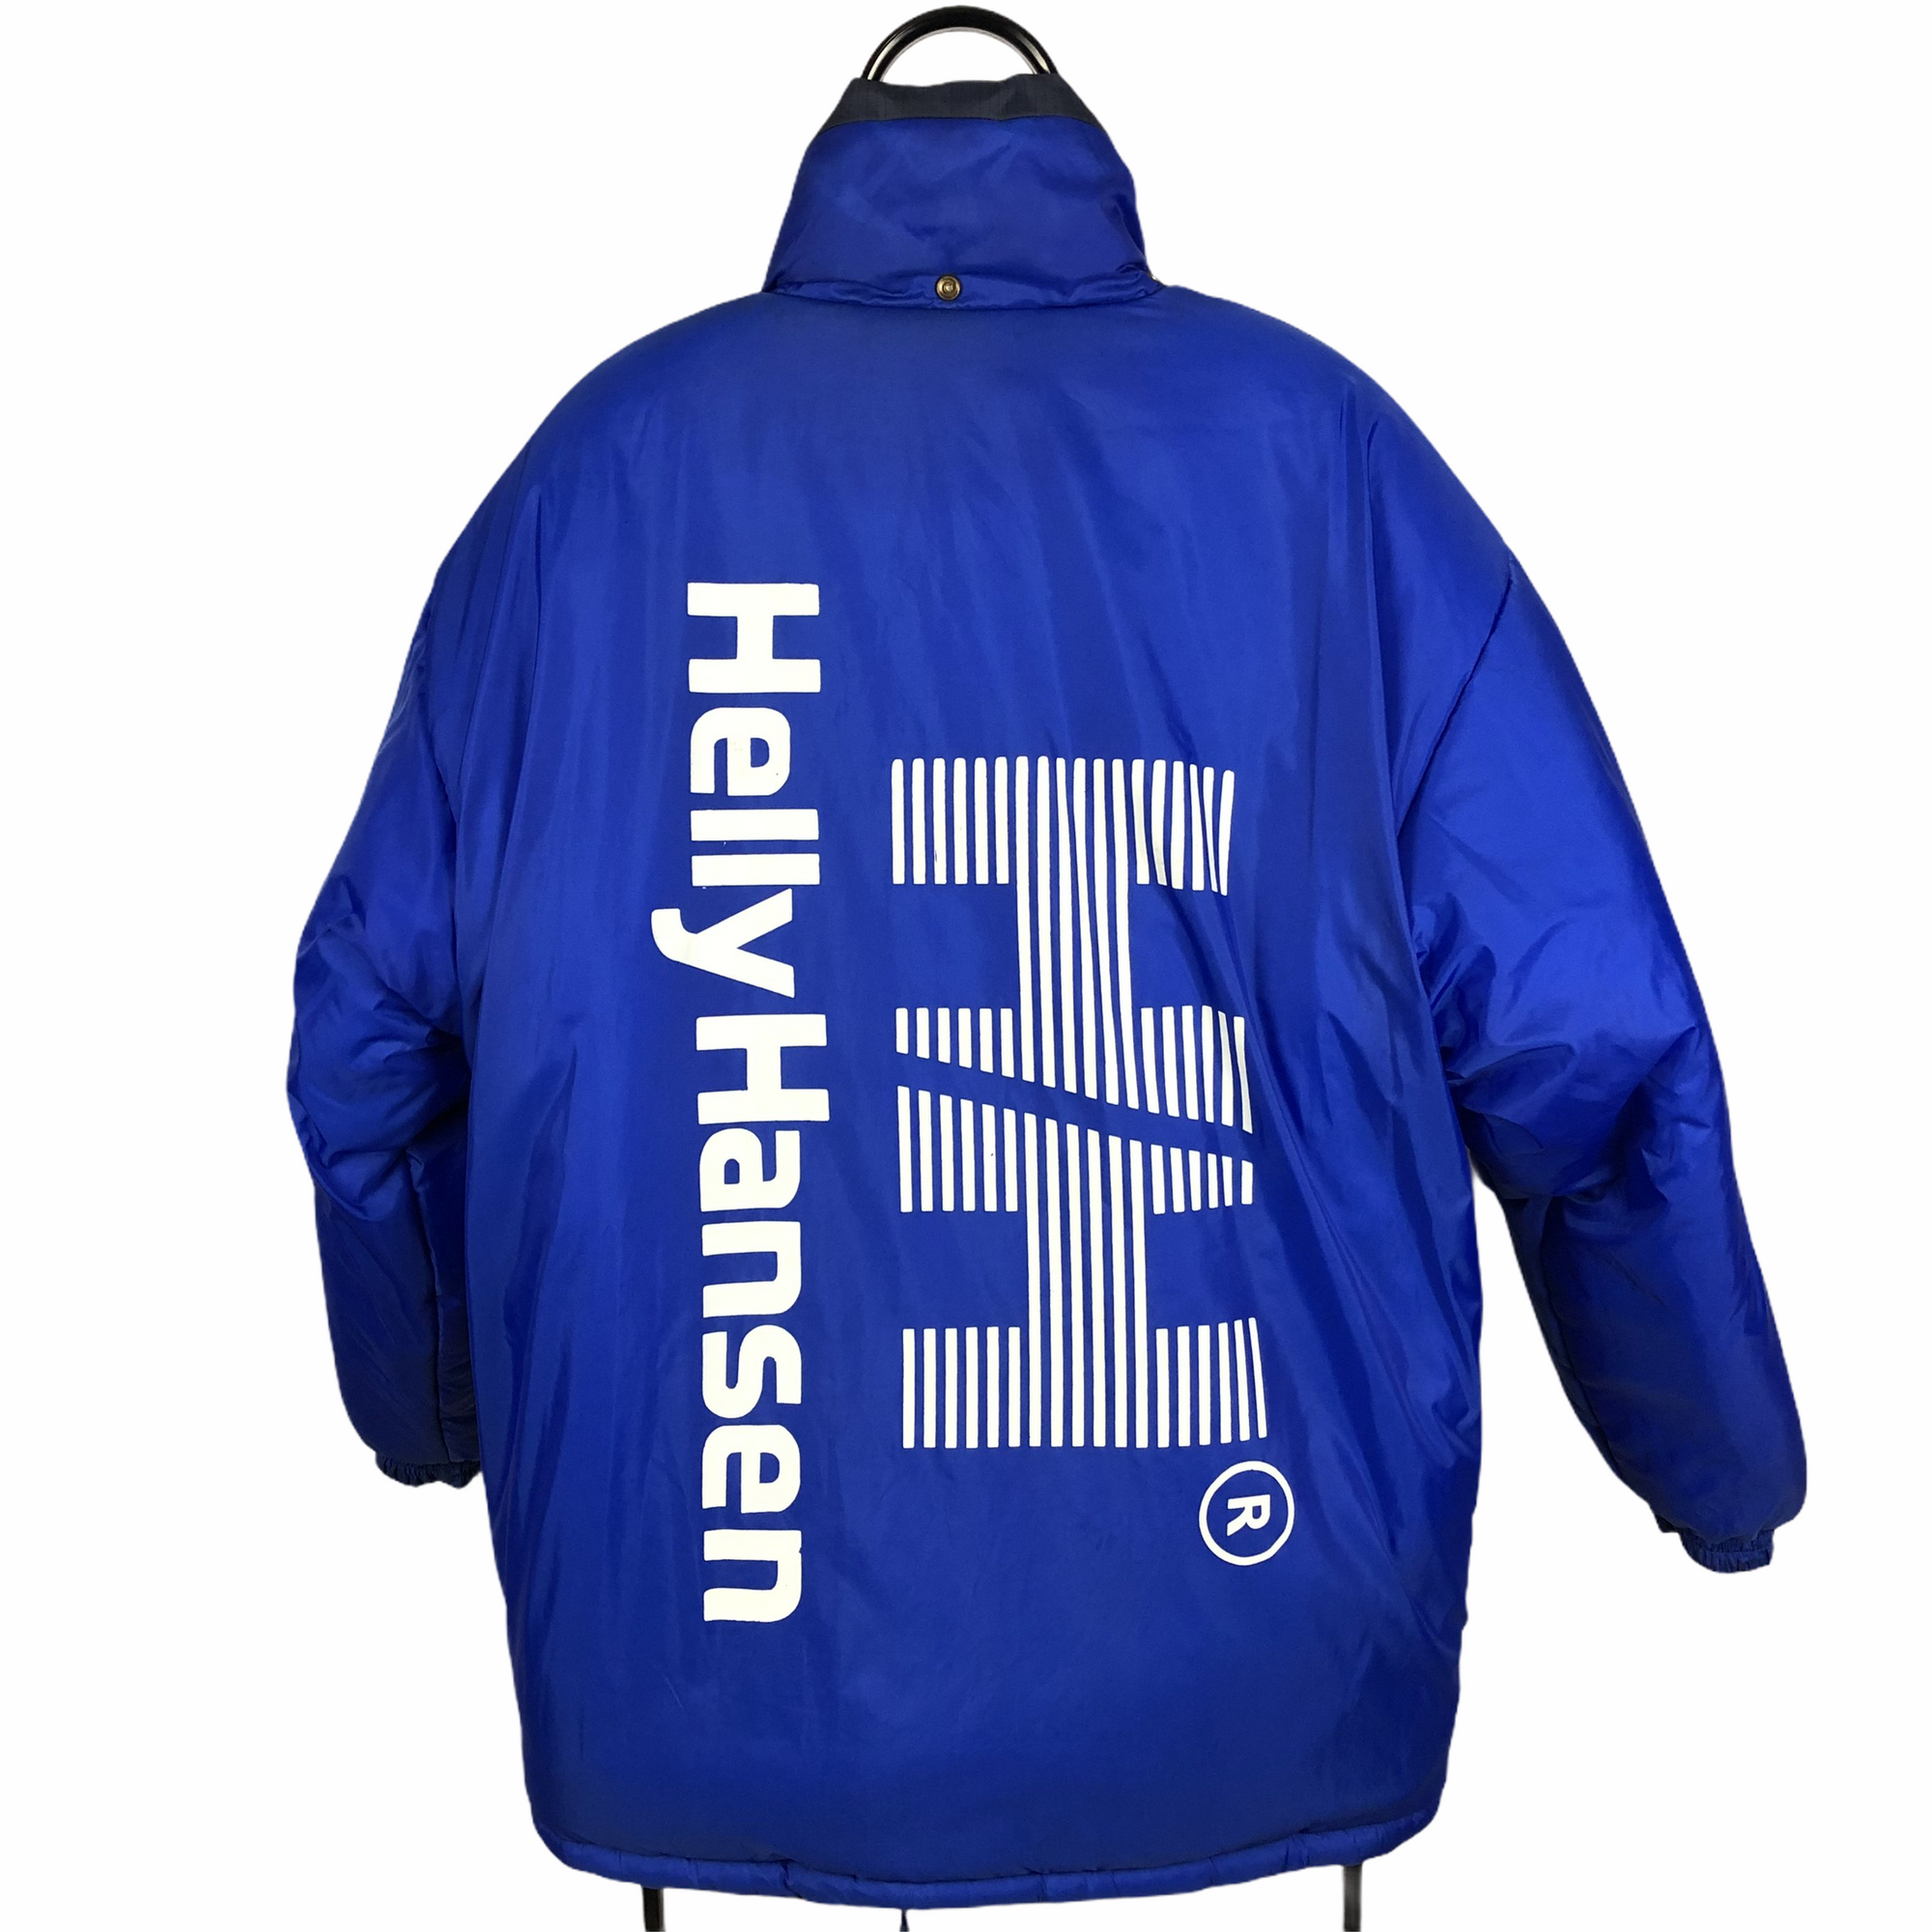 Vintage Helly Hansen Reversible Puffer Jacket in Blue/Navy - Men's XL/Women's XXL